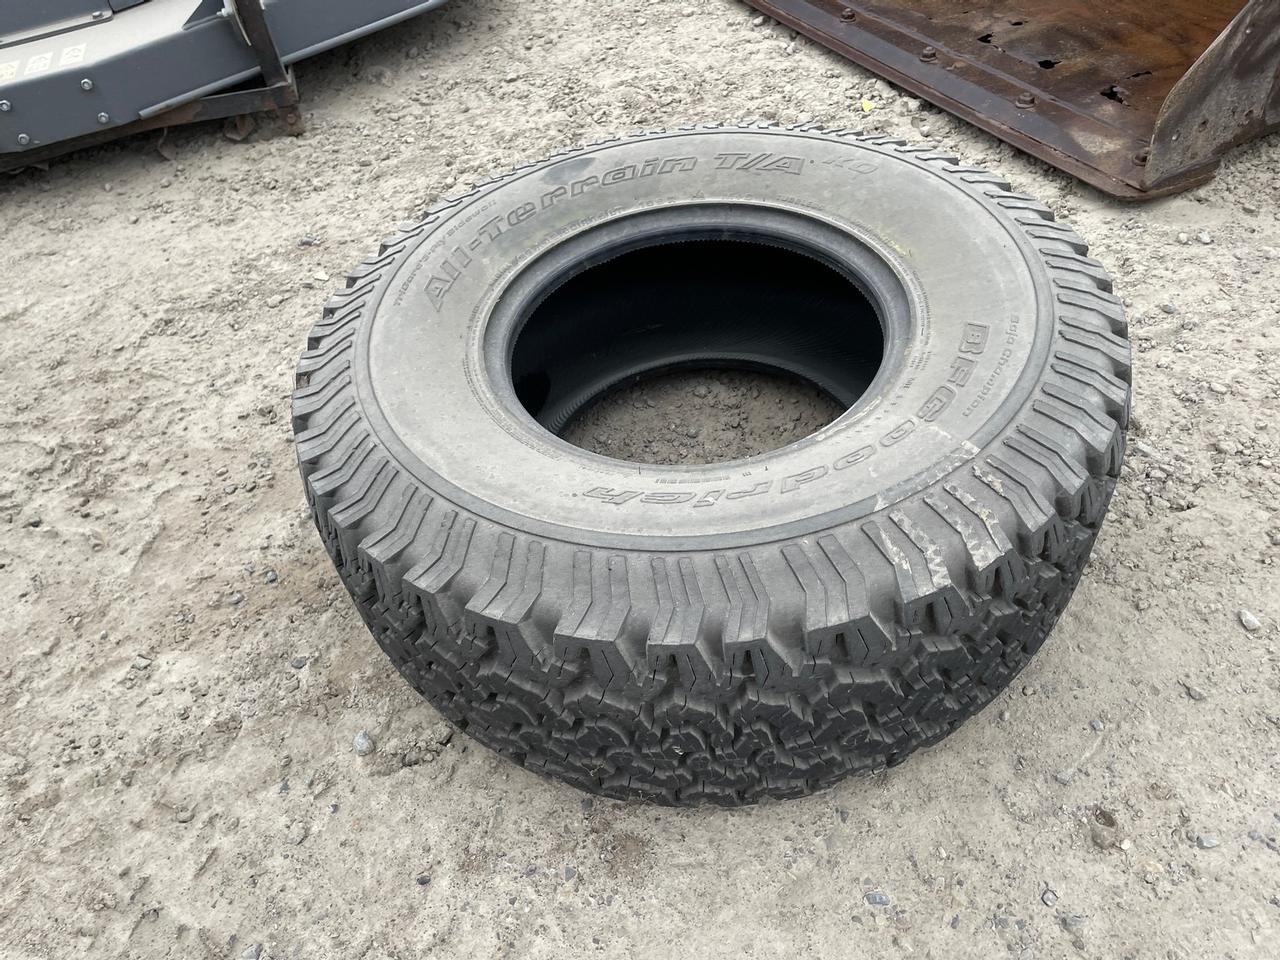 1 BFG Goodrich tire 33x12.50R15